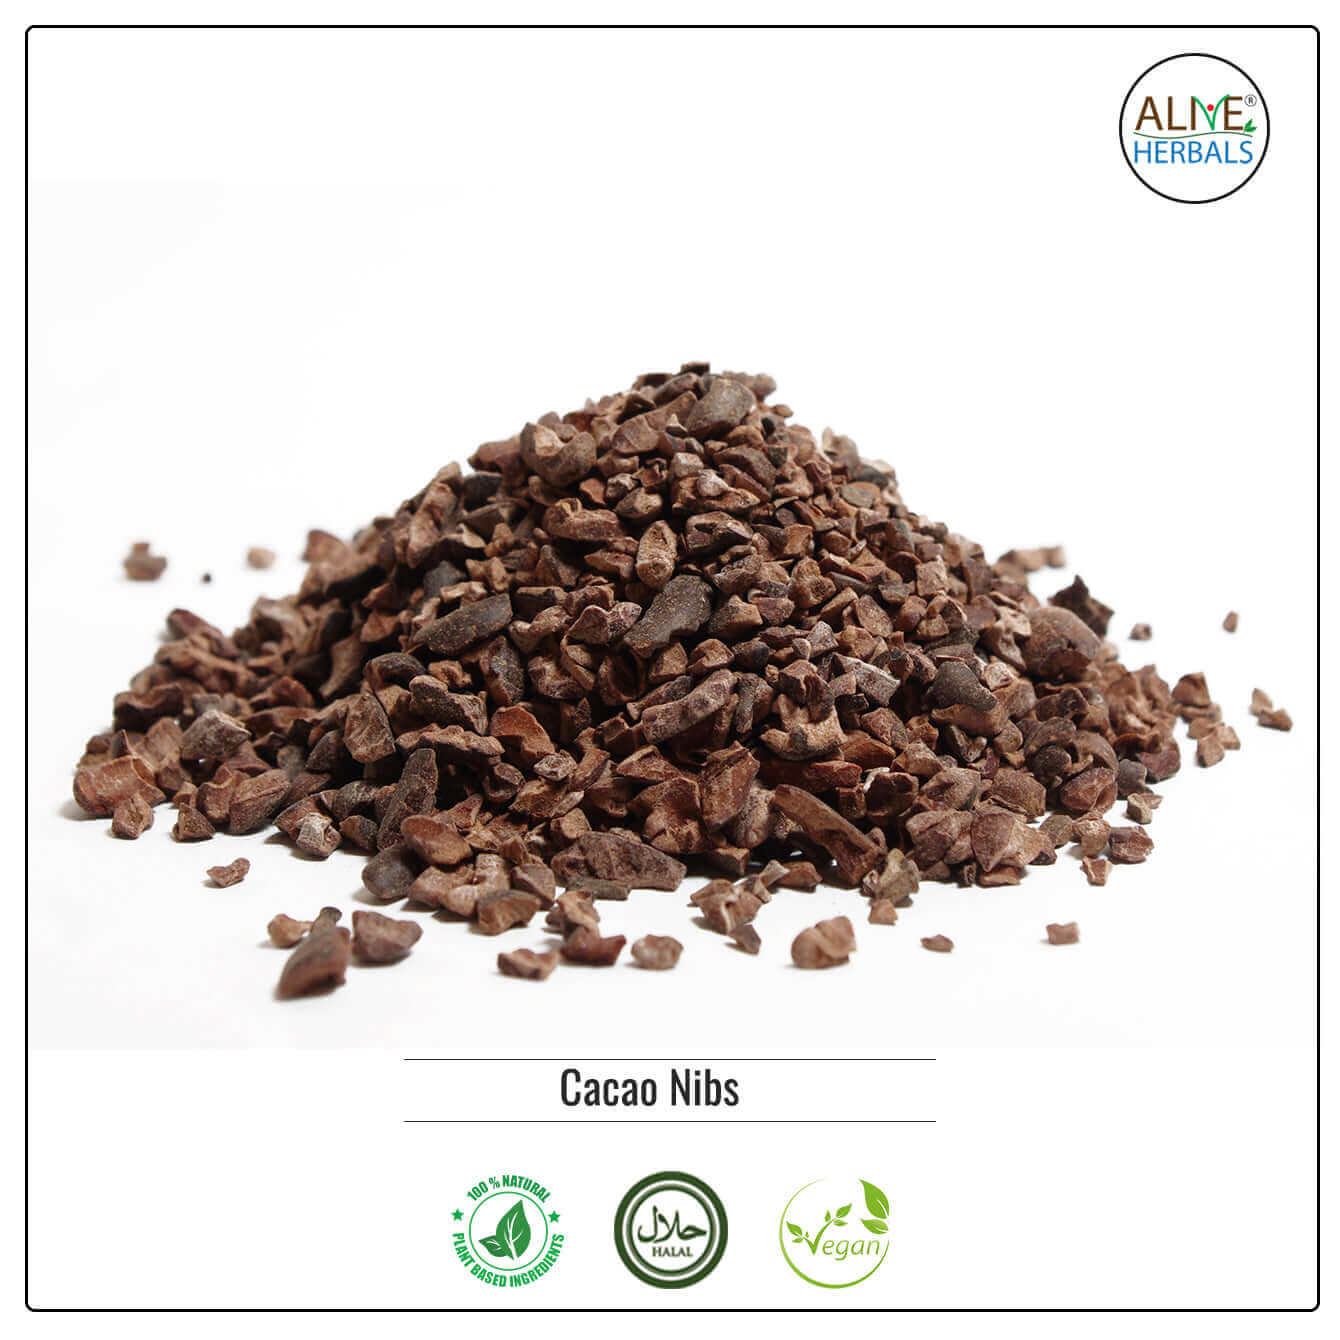 Cacao Nibs - Shop at Natural Food Store | Alive Herbals.